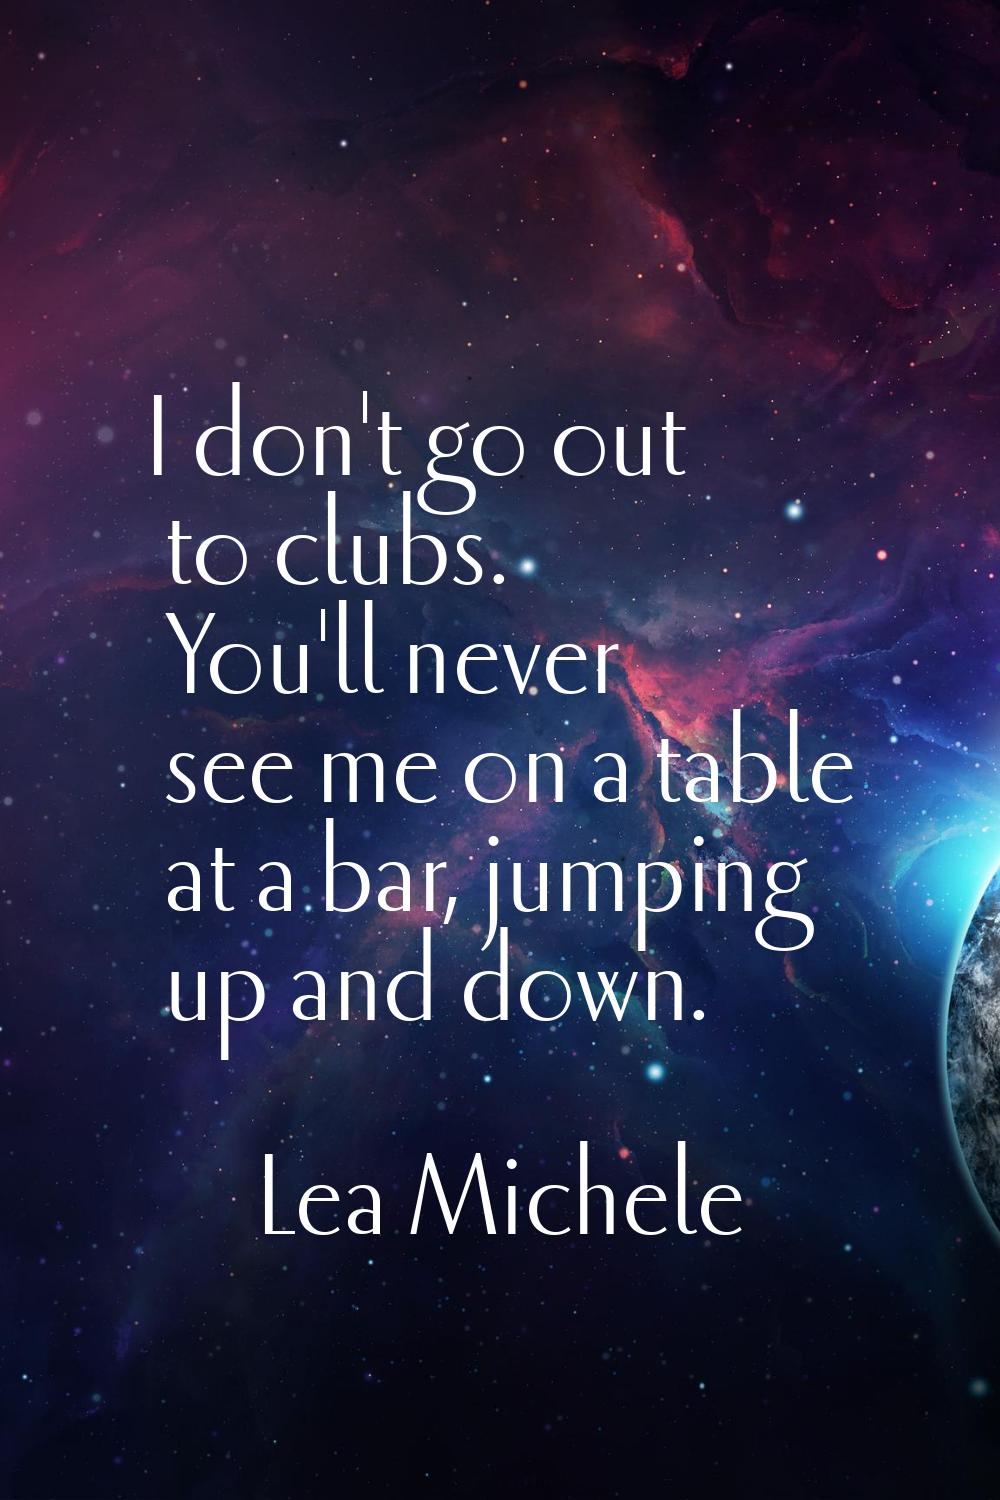 I don't go out to clubs. You'll never see me on a table at a bar, jumping up and down.